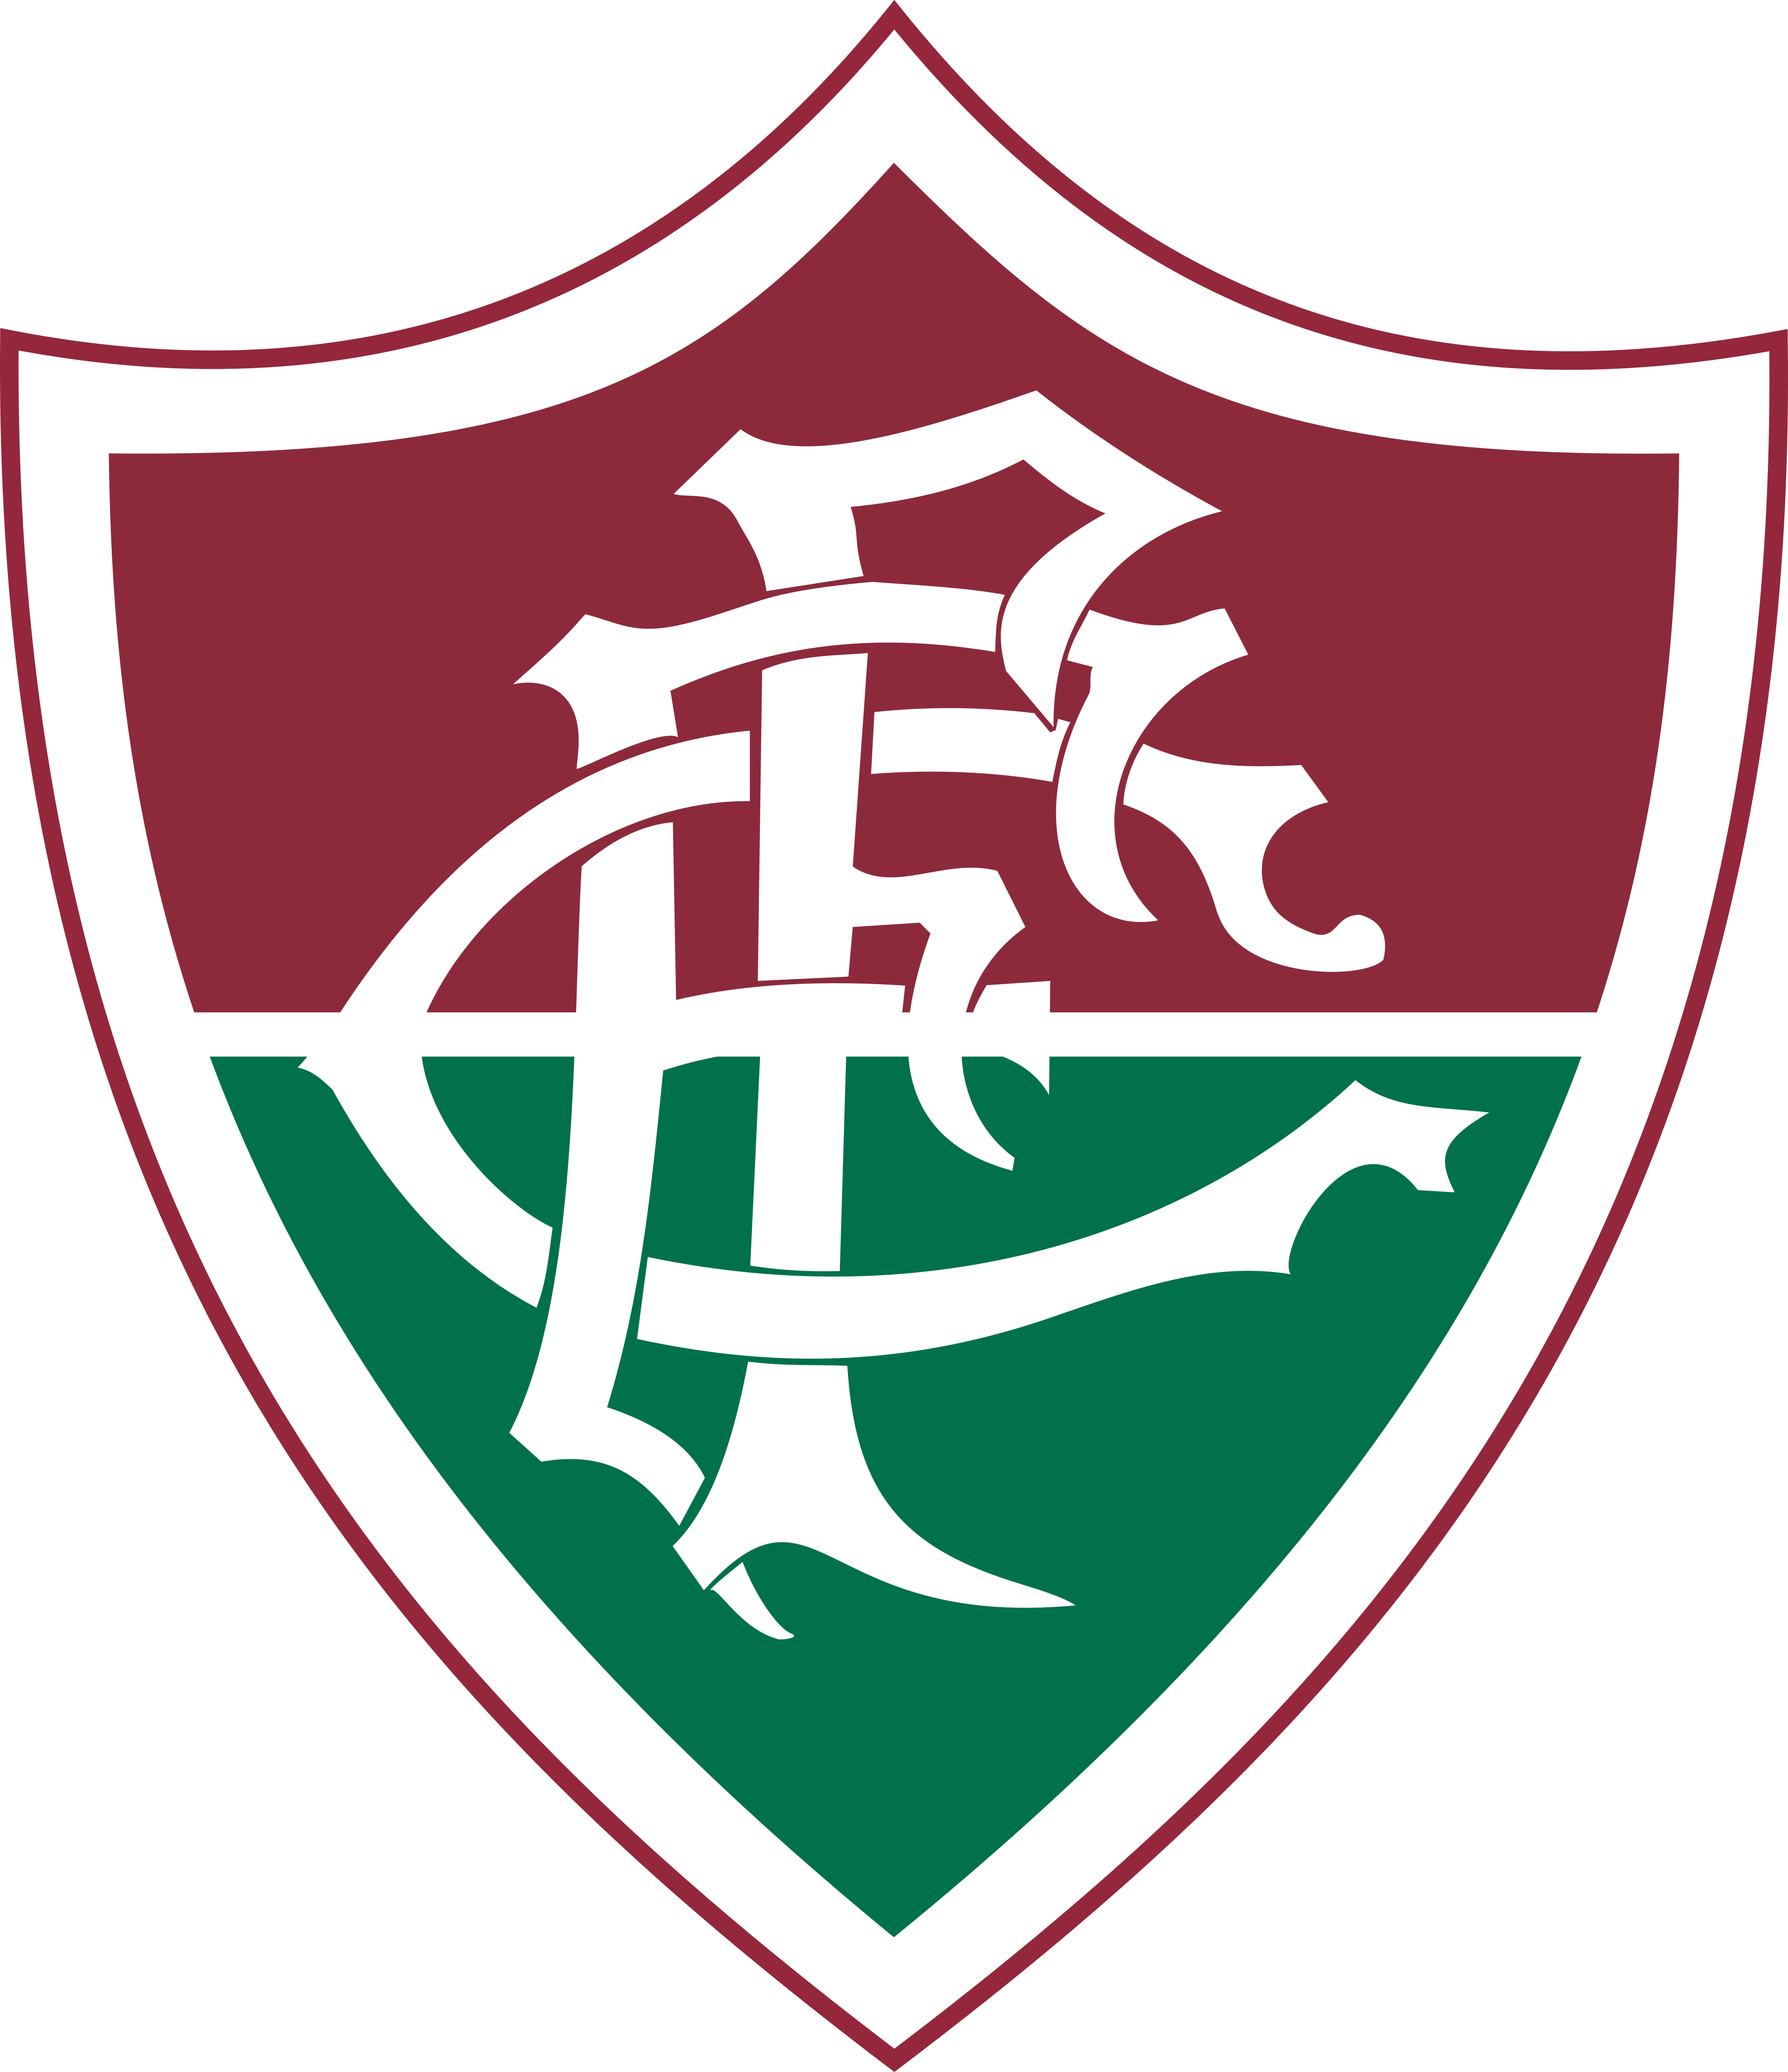 Escudo do Fluminense FC.